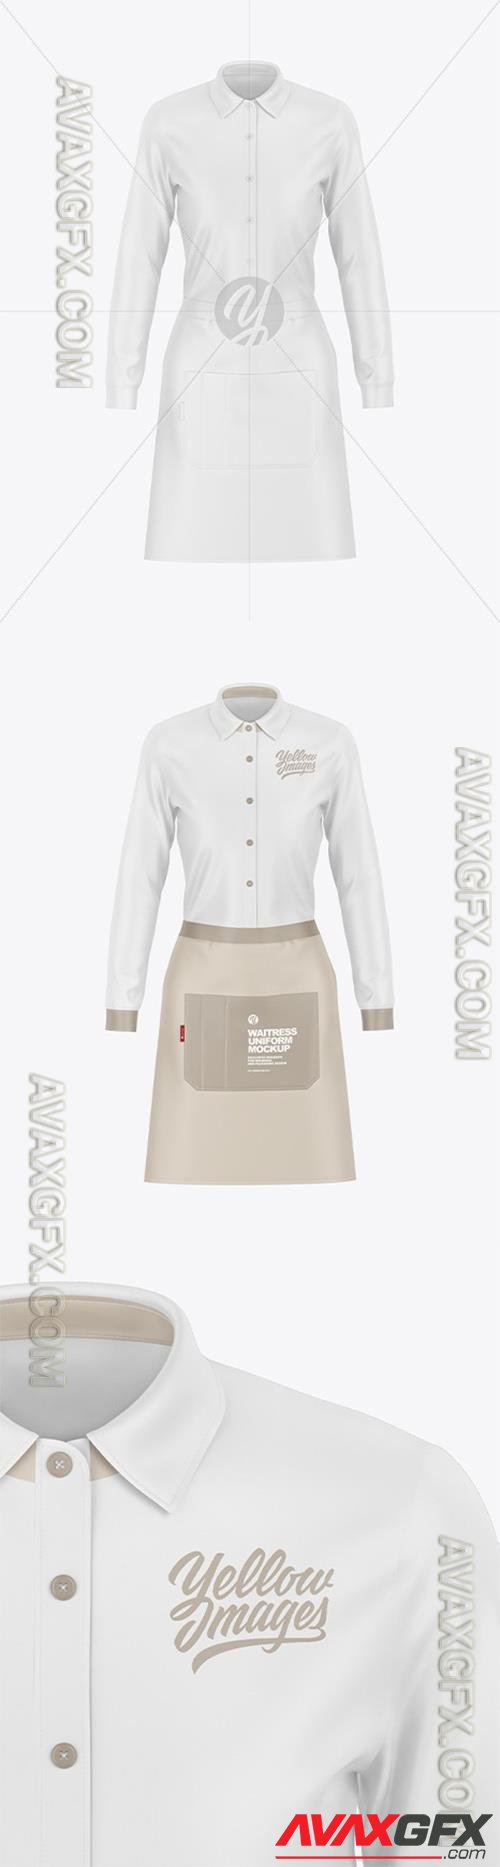 Waitress Uniform Mockup 95684